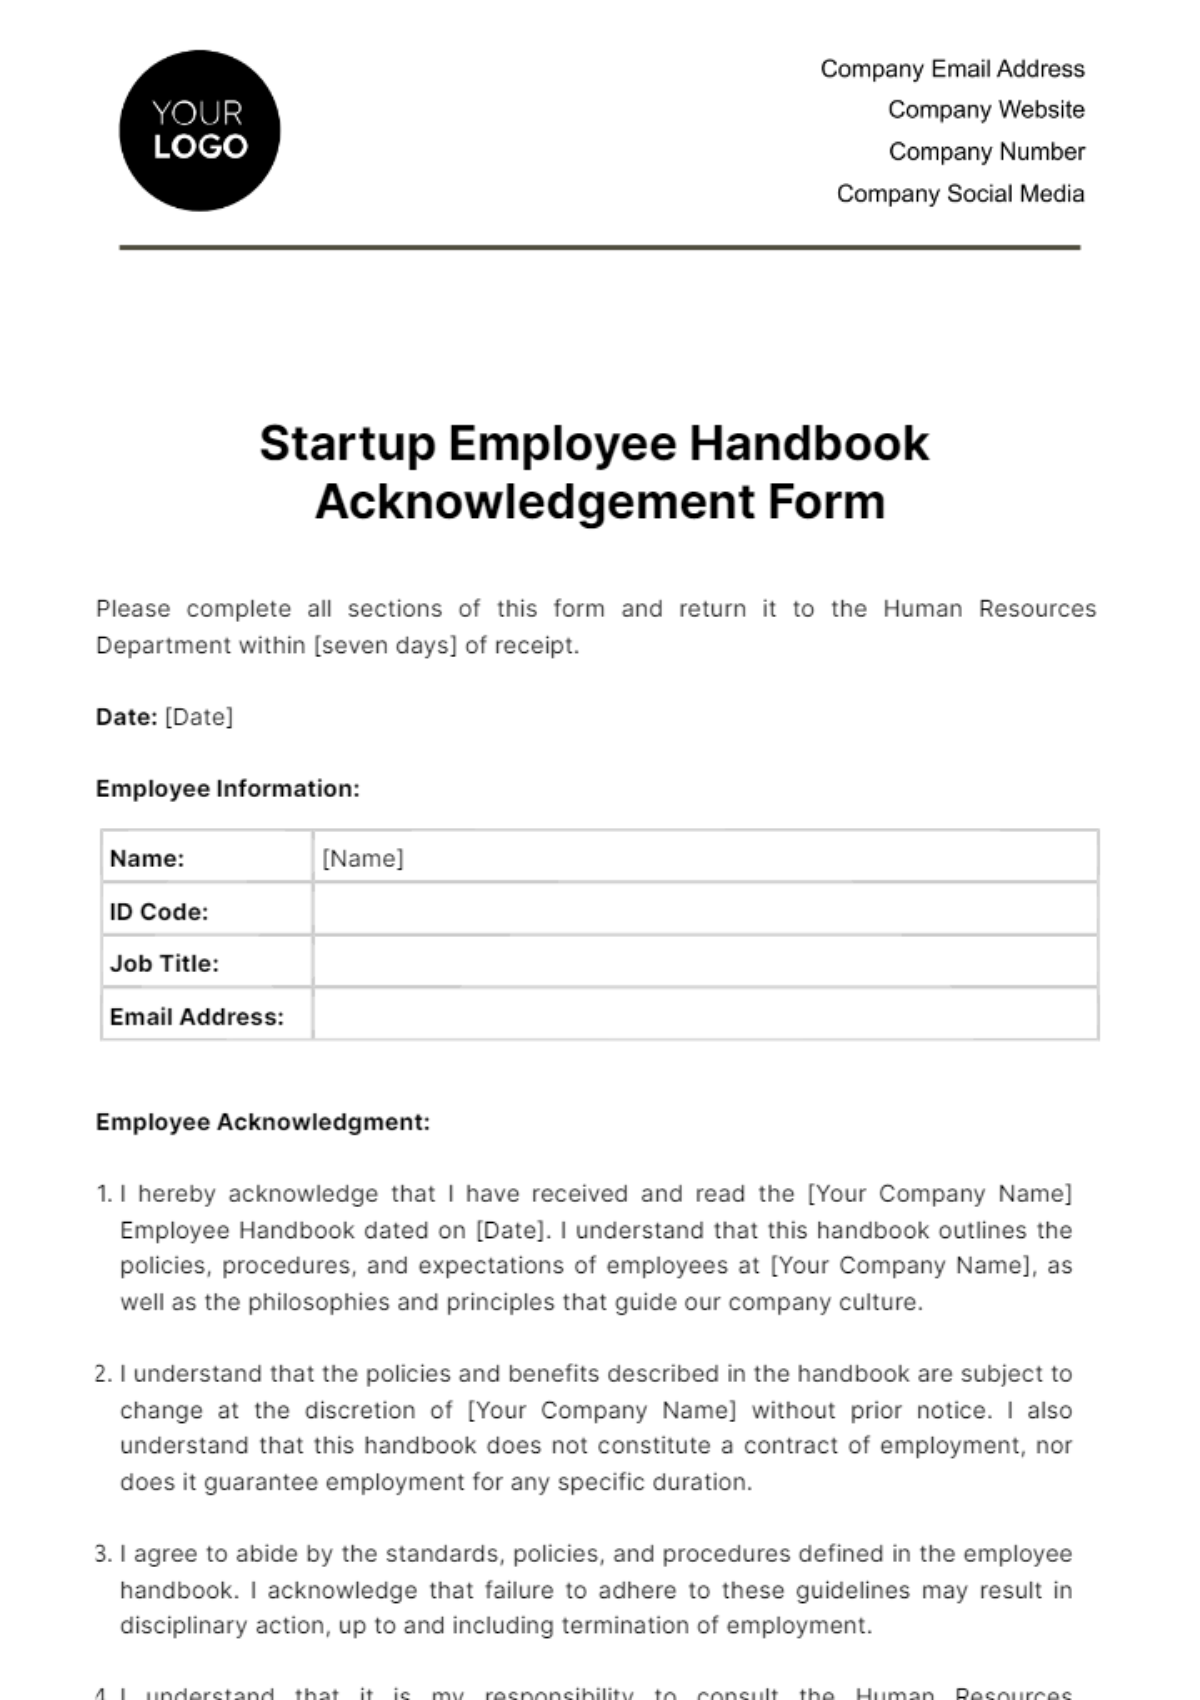 Startup Employee Handbook Acknowledgment Form Template